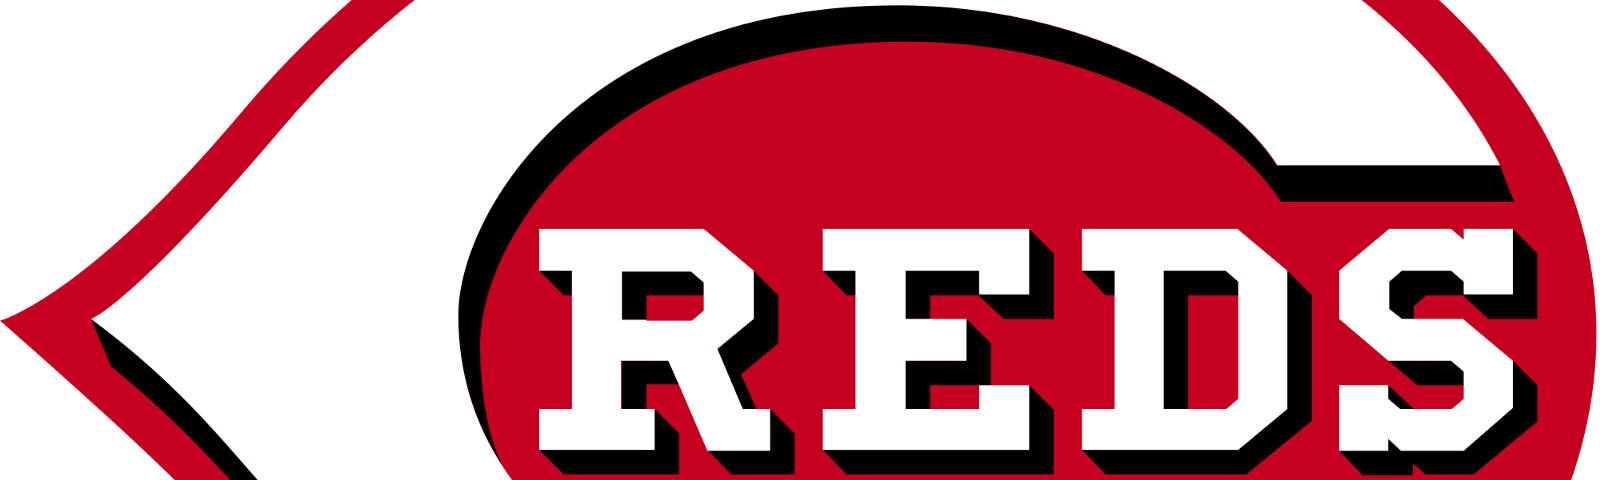 Cincinnati Reds Logo Png